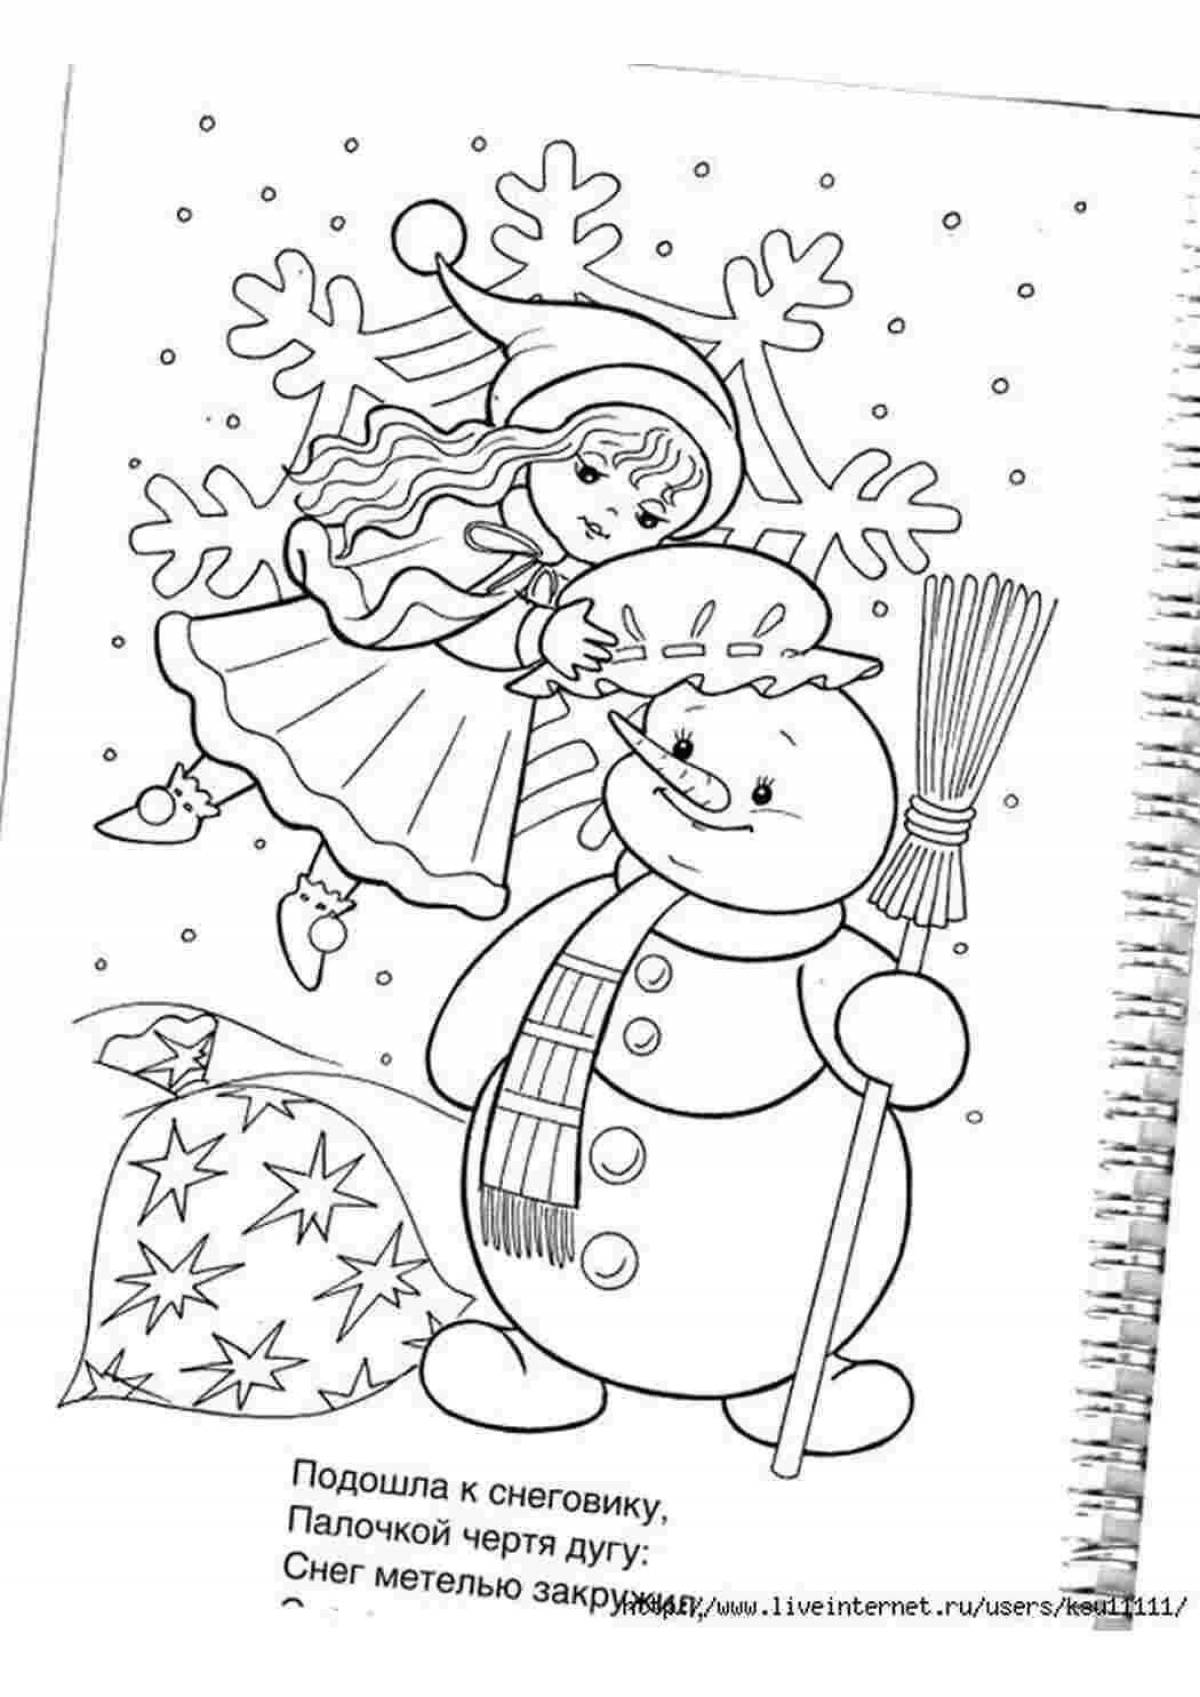 Cute snowman coloring book